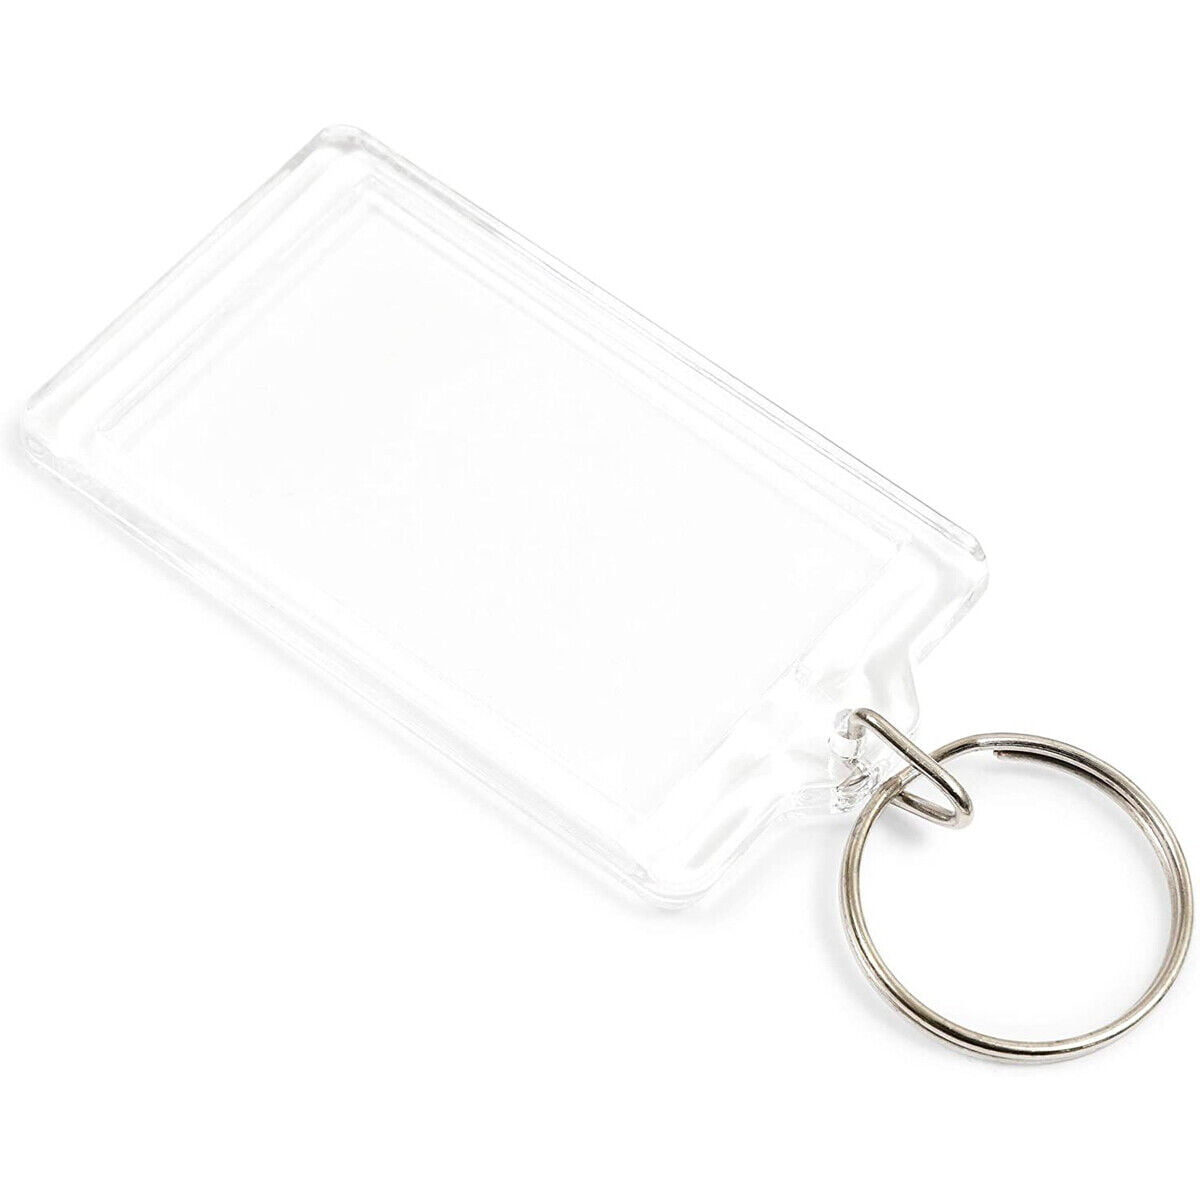 Blank keychain Clear Acrylic Insert photos DIY 24pcs size 1.5 by 2.5